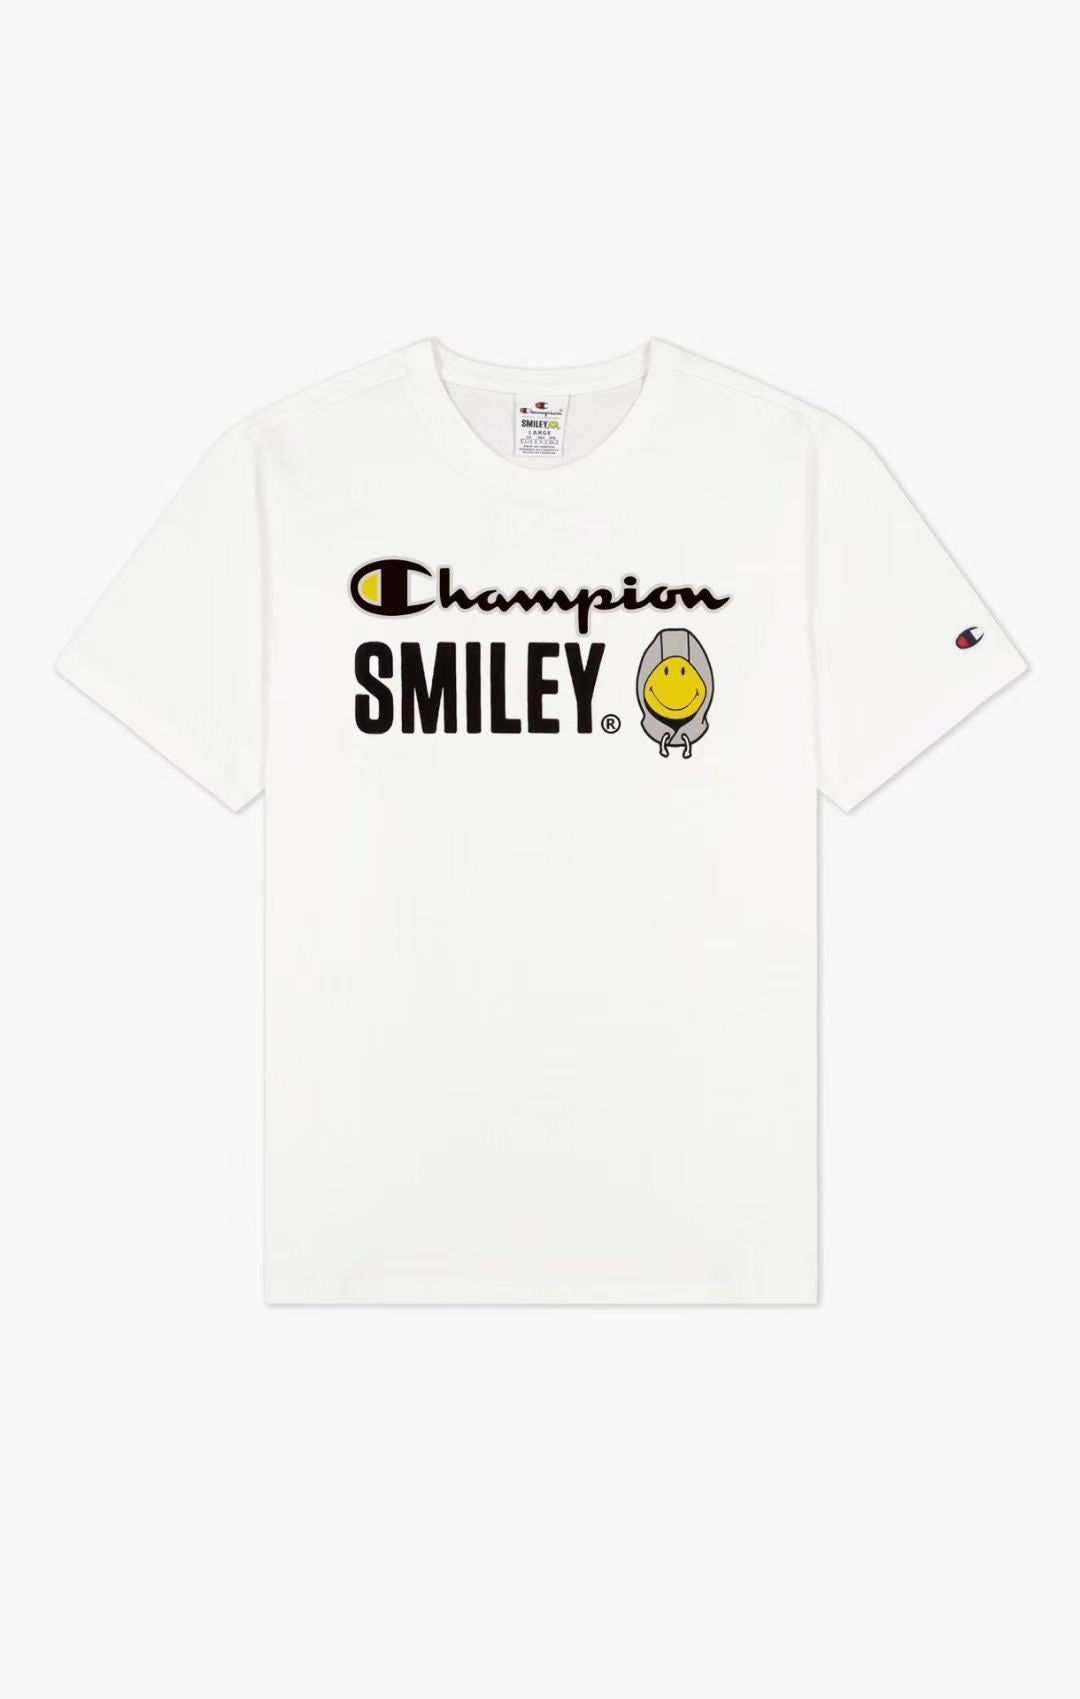 Champion x smiley logo pattern 50th 紀念tee